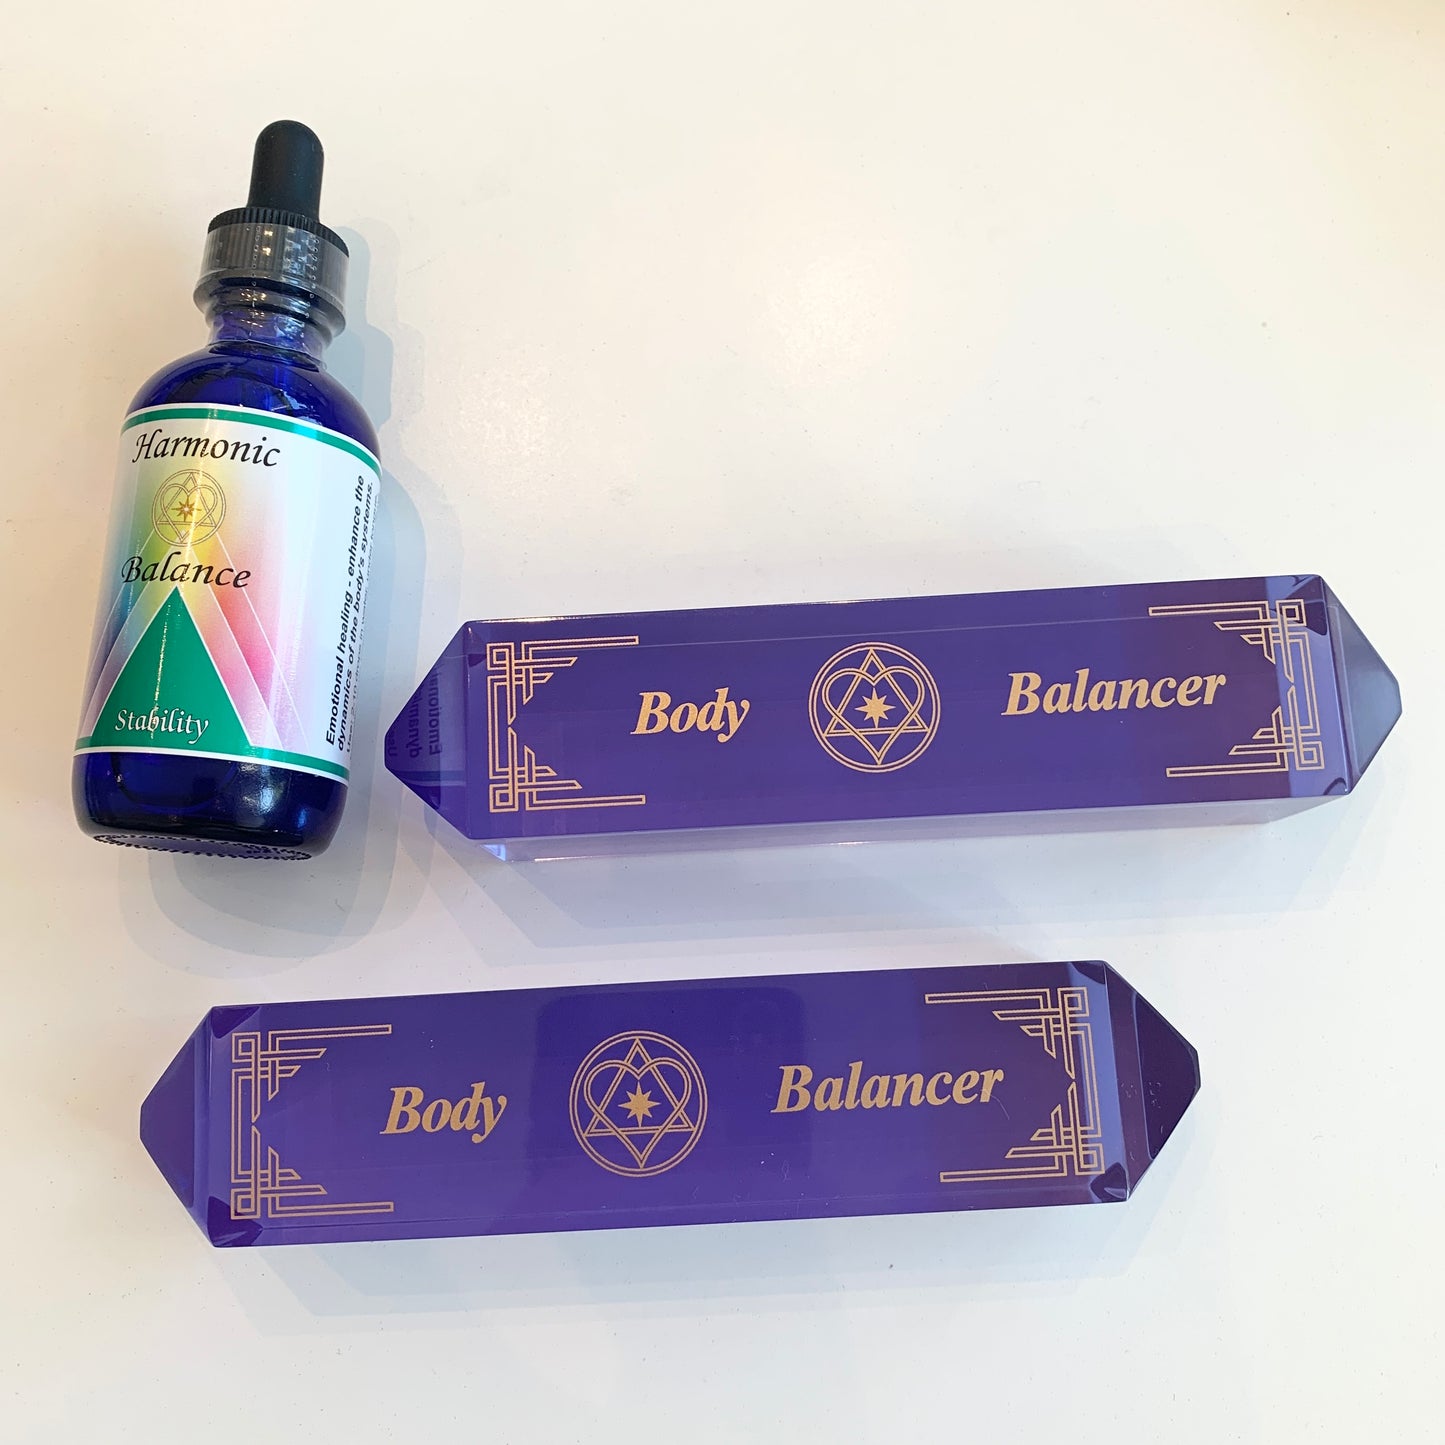 Body Balancers (1 pair) with Harmonics Balance essence 60ml